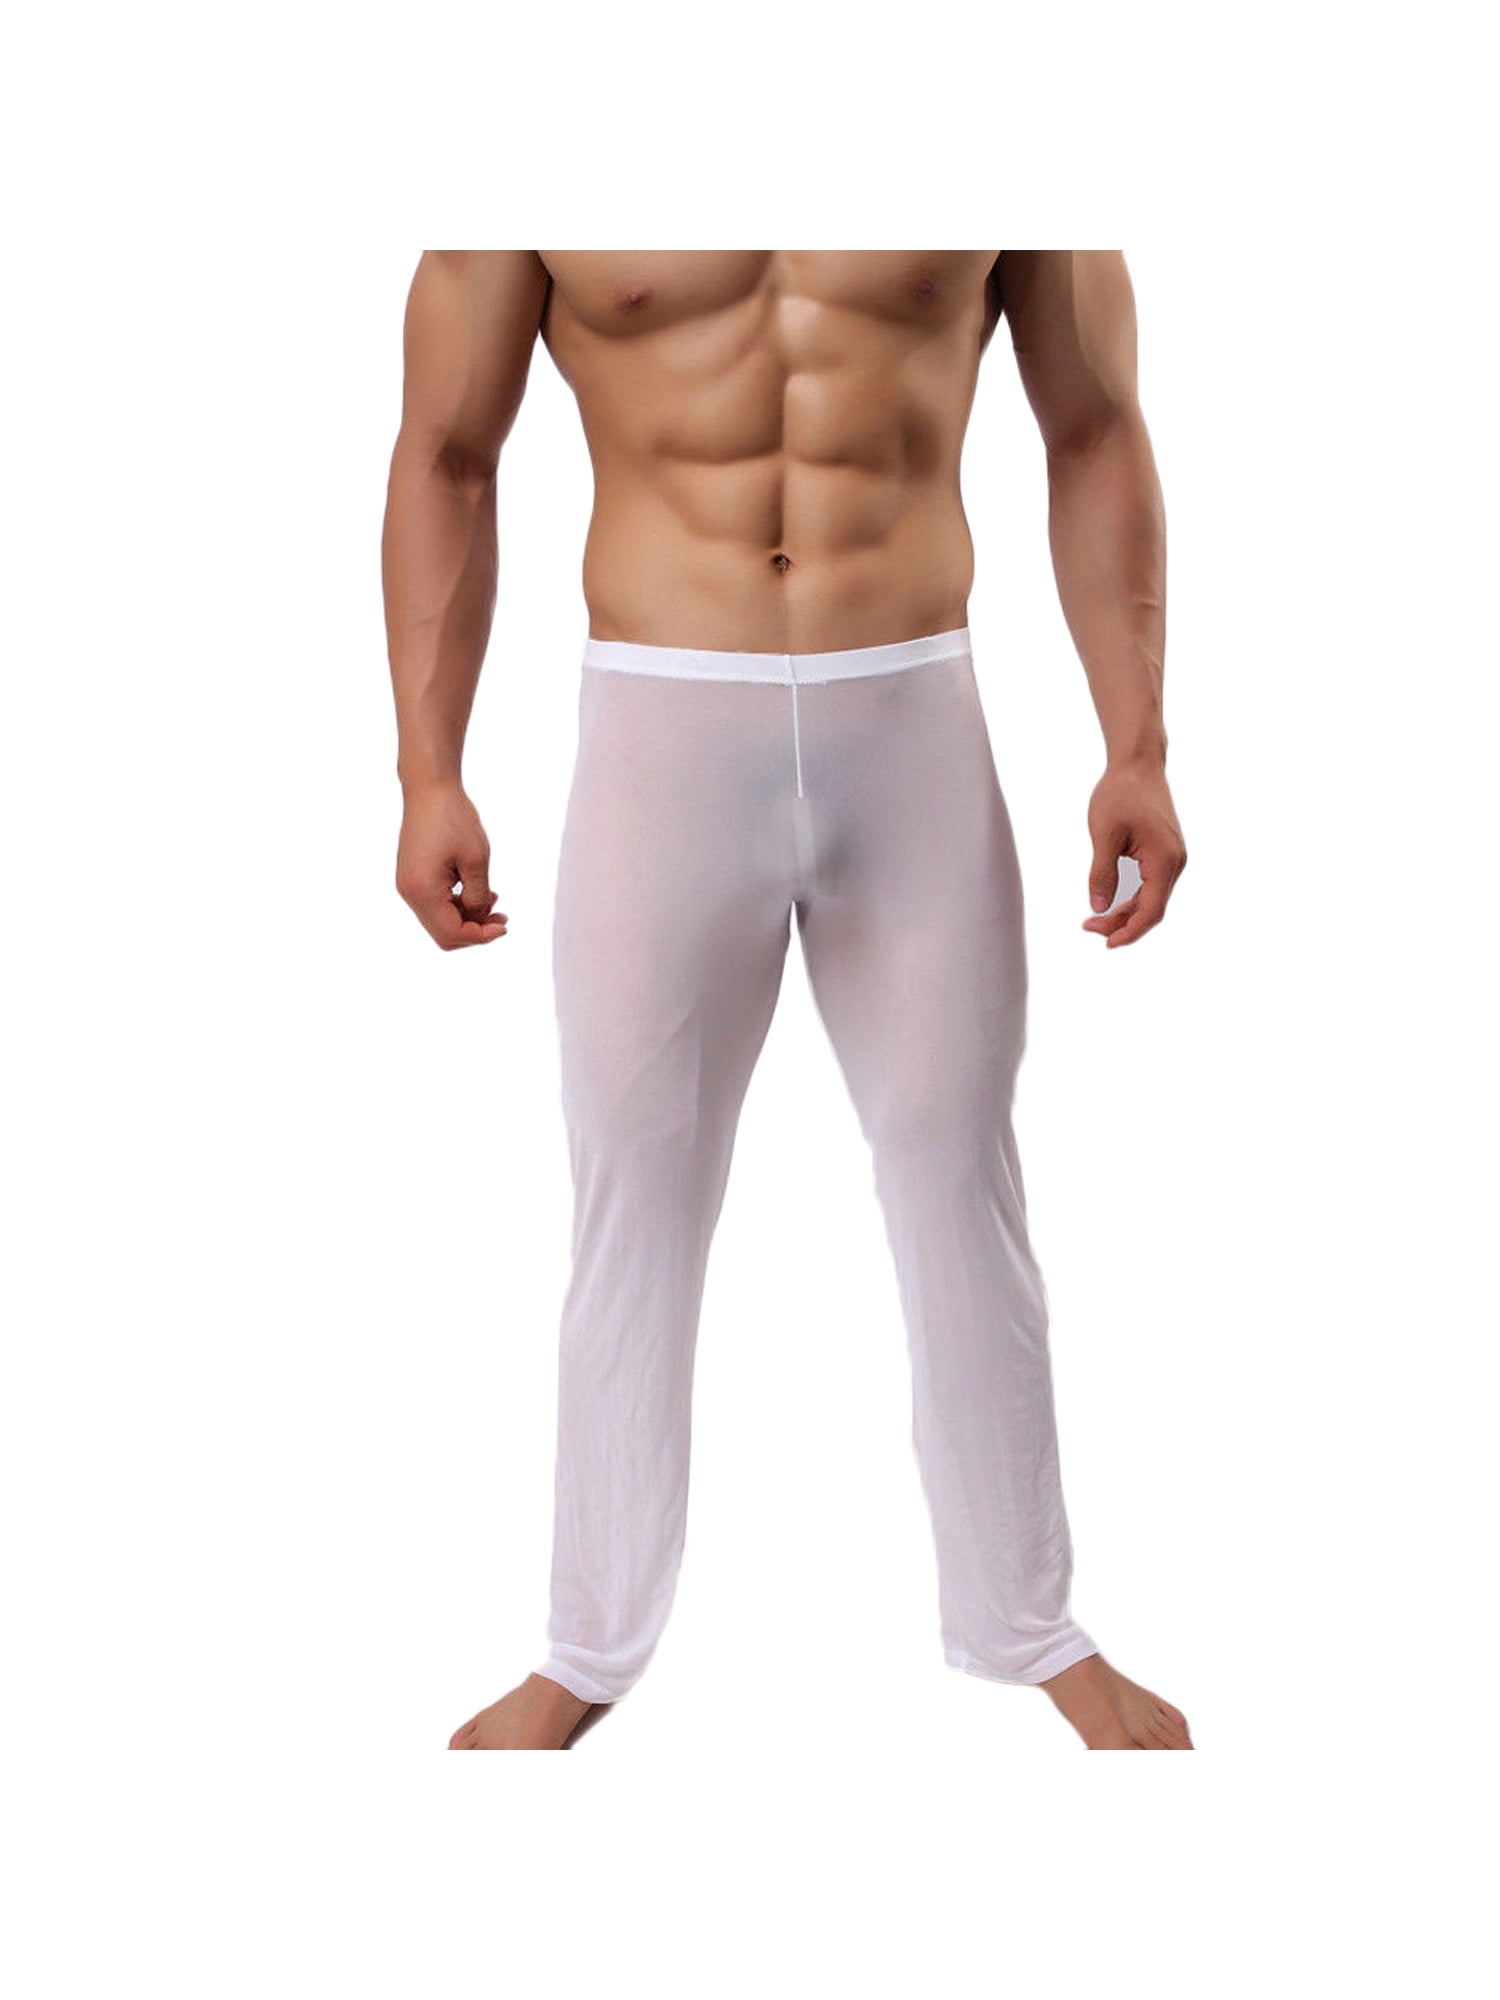 Wofupowga Mens Straight Leg Striped Breathable Casual Elastic Waist Slim Fit Pants 